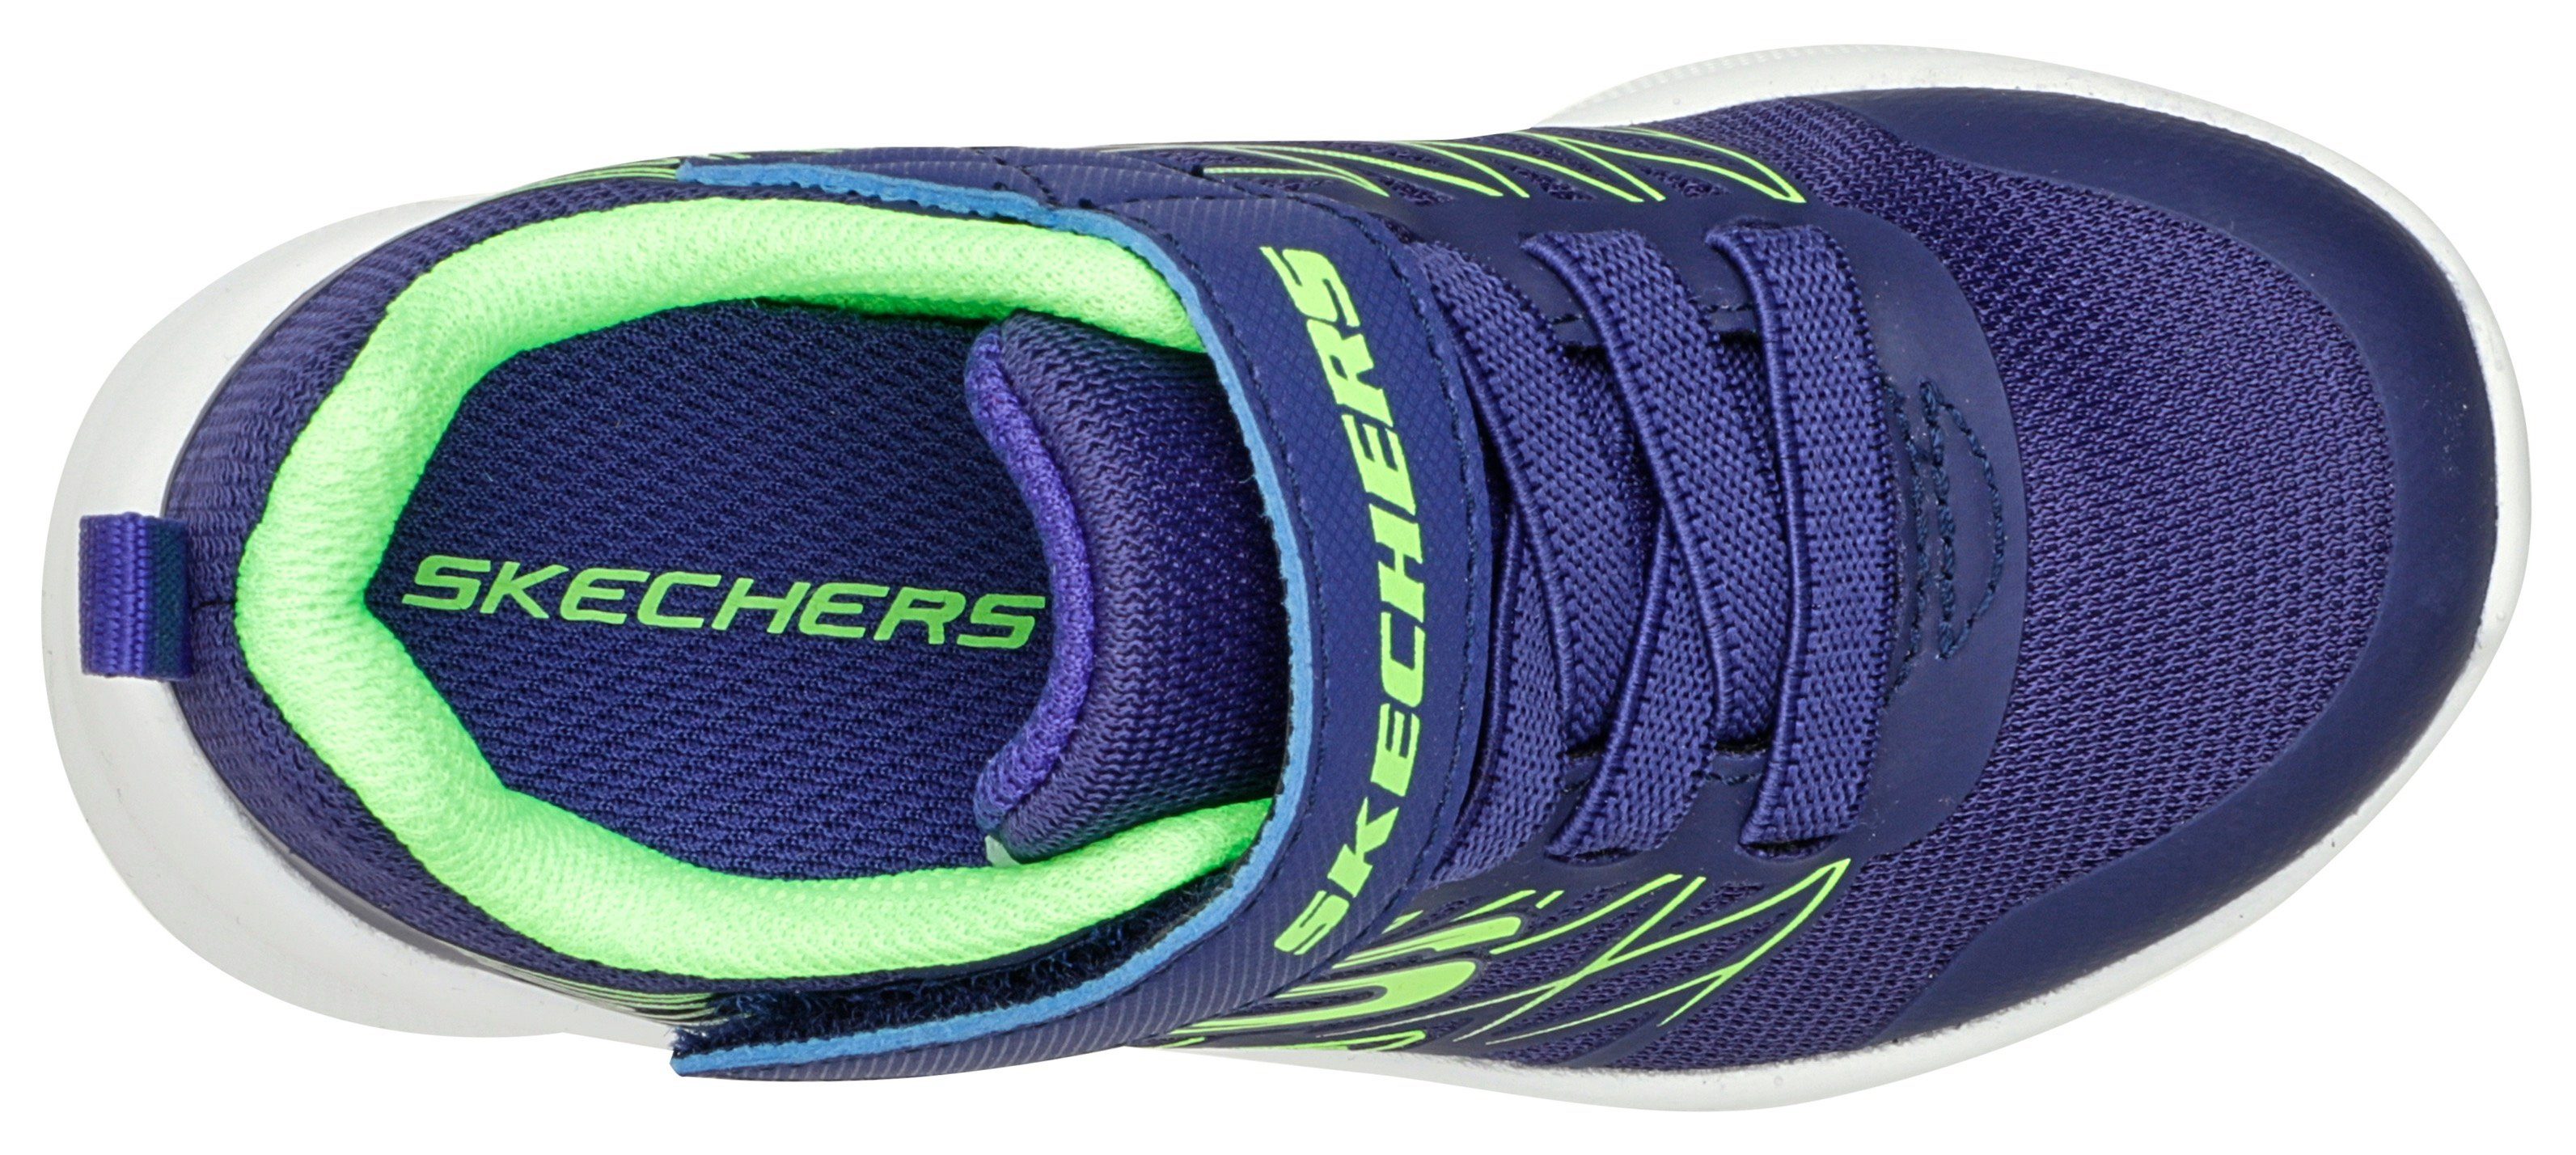 Skechers Kids MICROSPEC TEXLOR leichter Sneaker mit Laufsohle